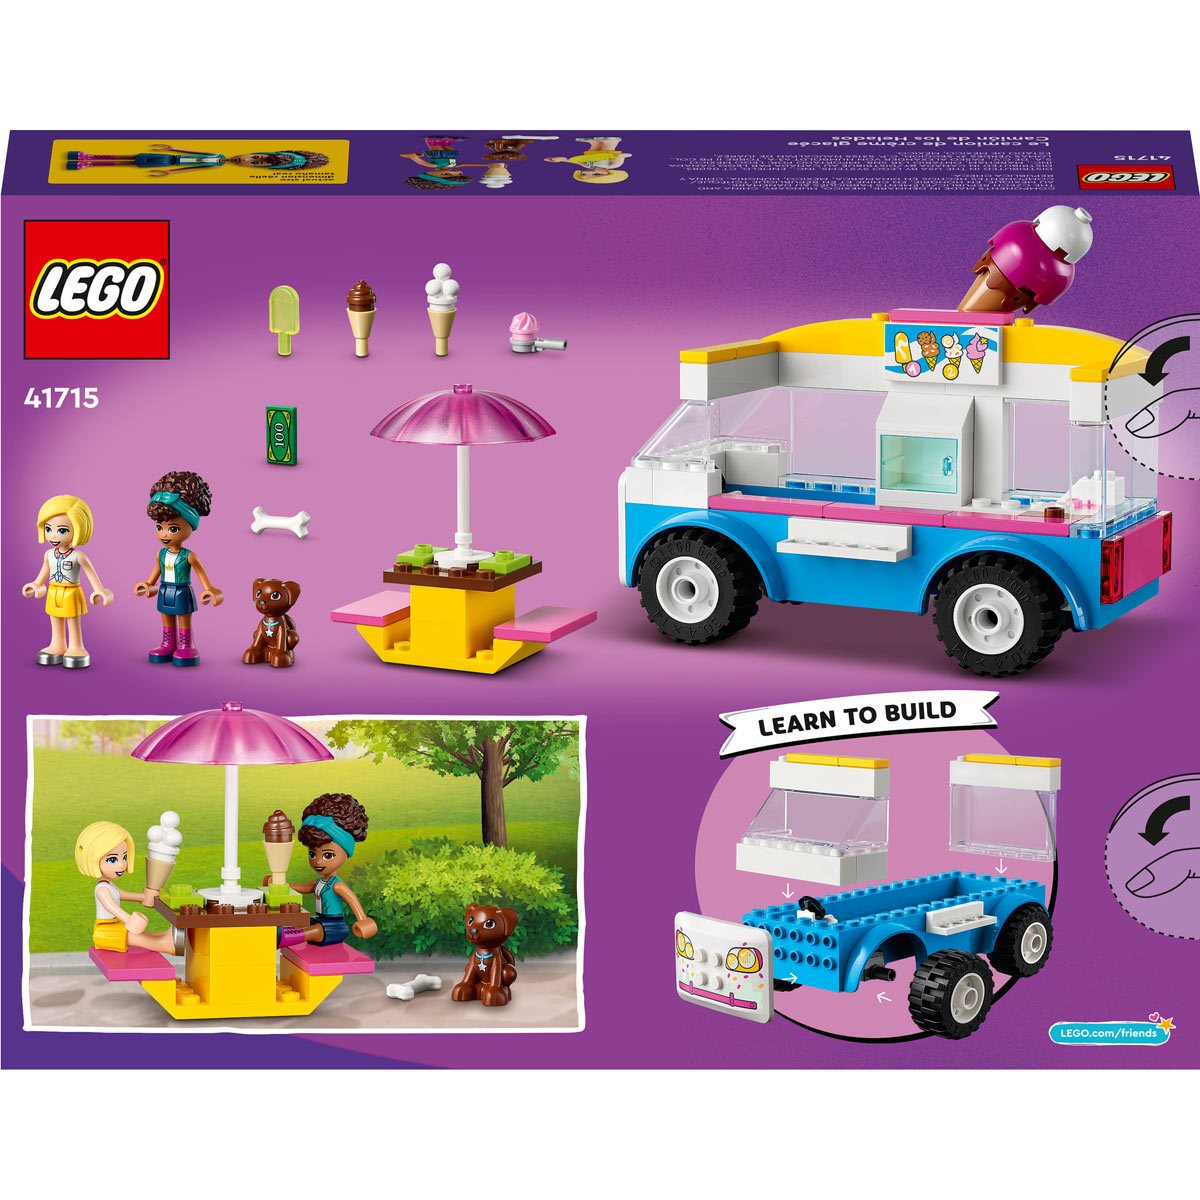 Entertainment - 41715 LEGO Truck Ice-Cream Friends Earth